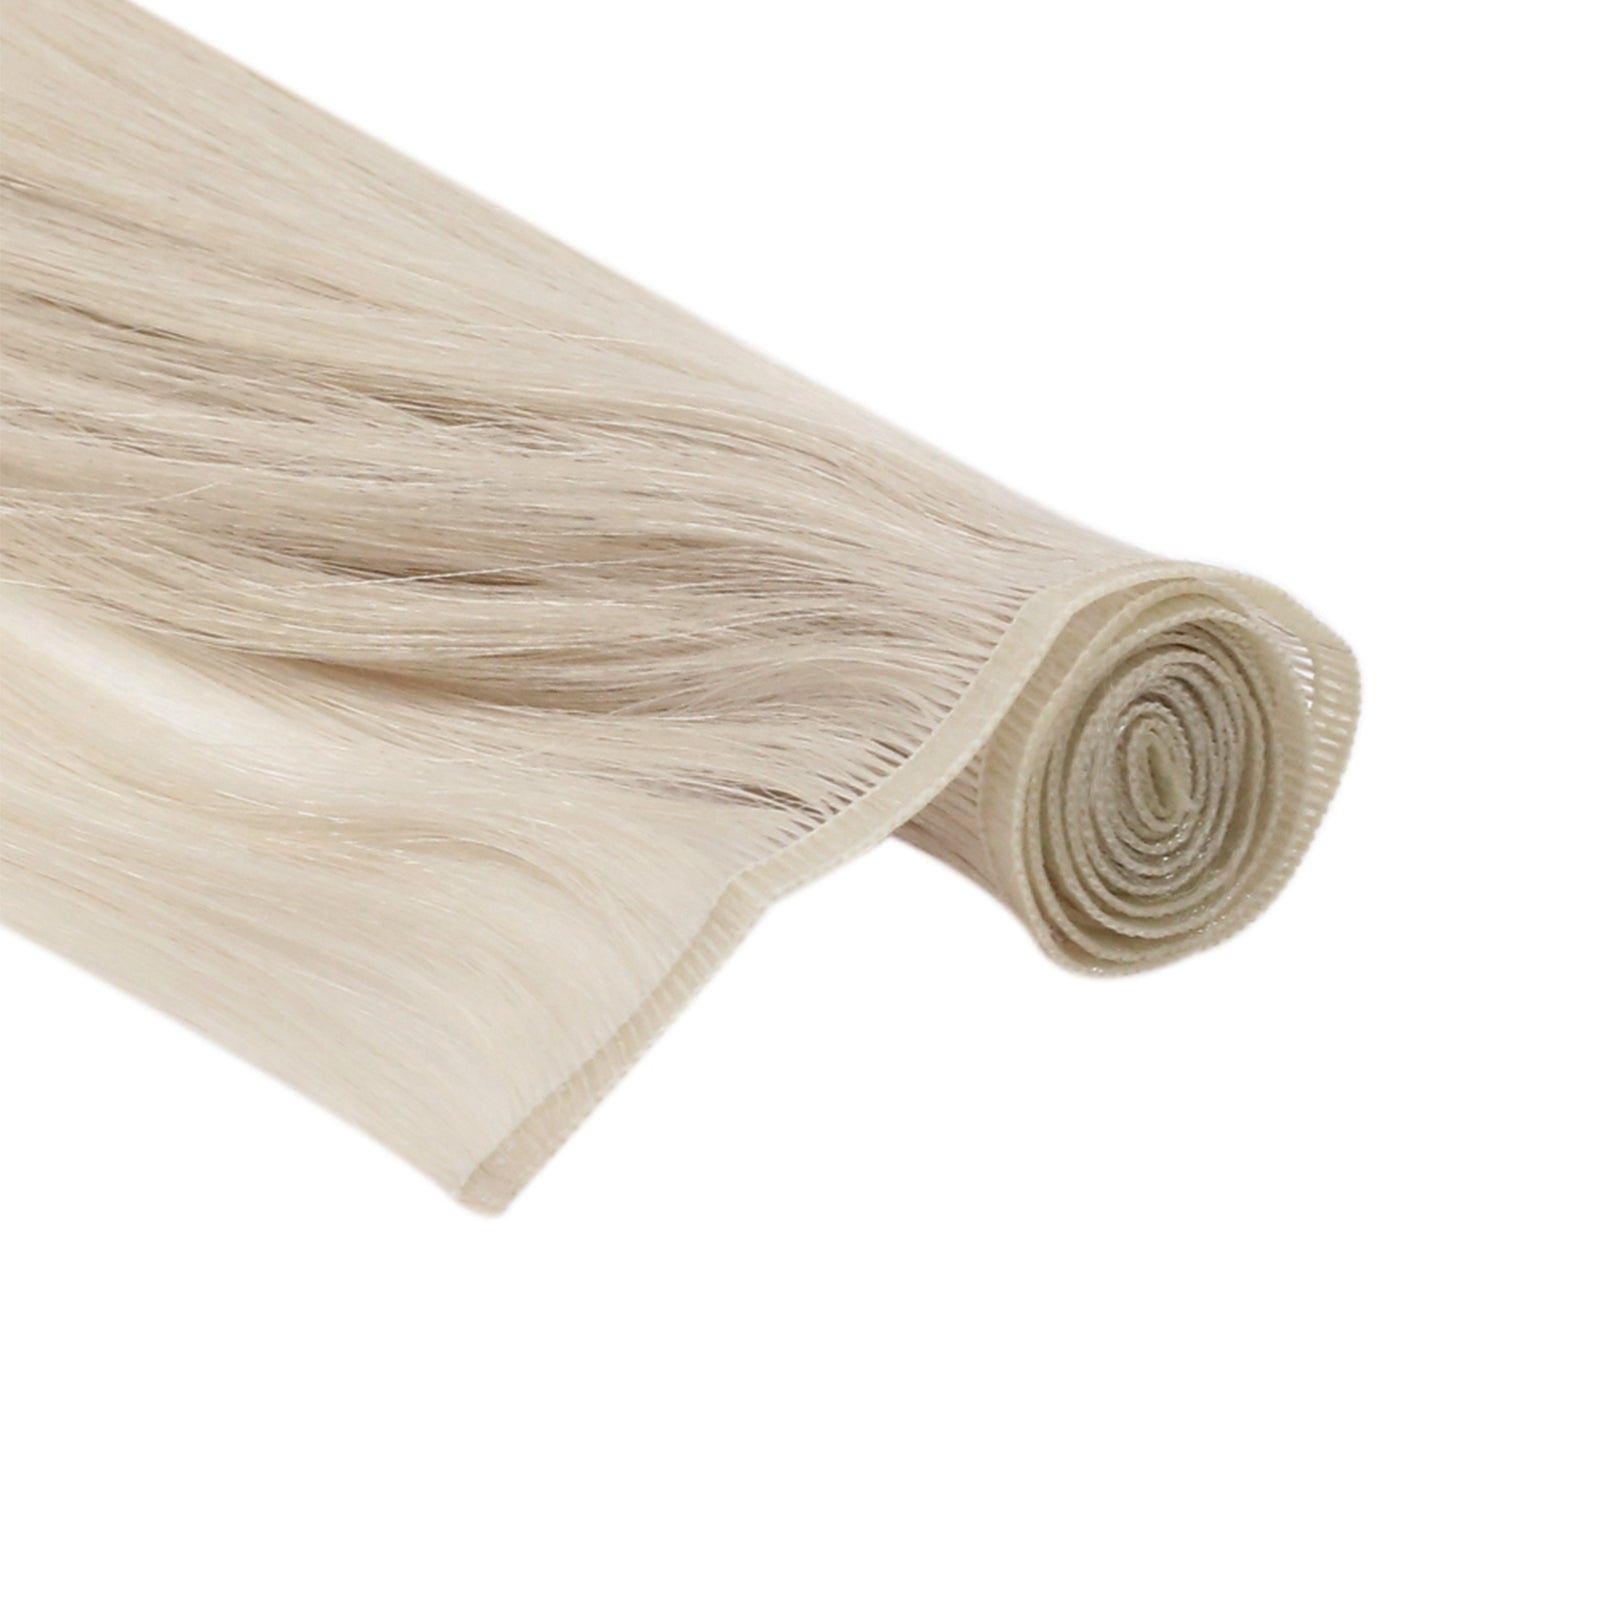 Flat Silk Weft Virgin Hair Seamless Whitest Blonde #1000 | LaaVoo